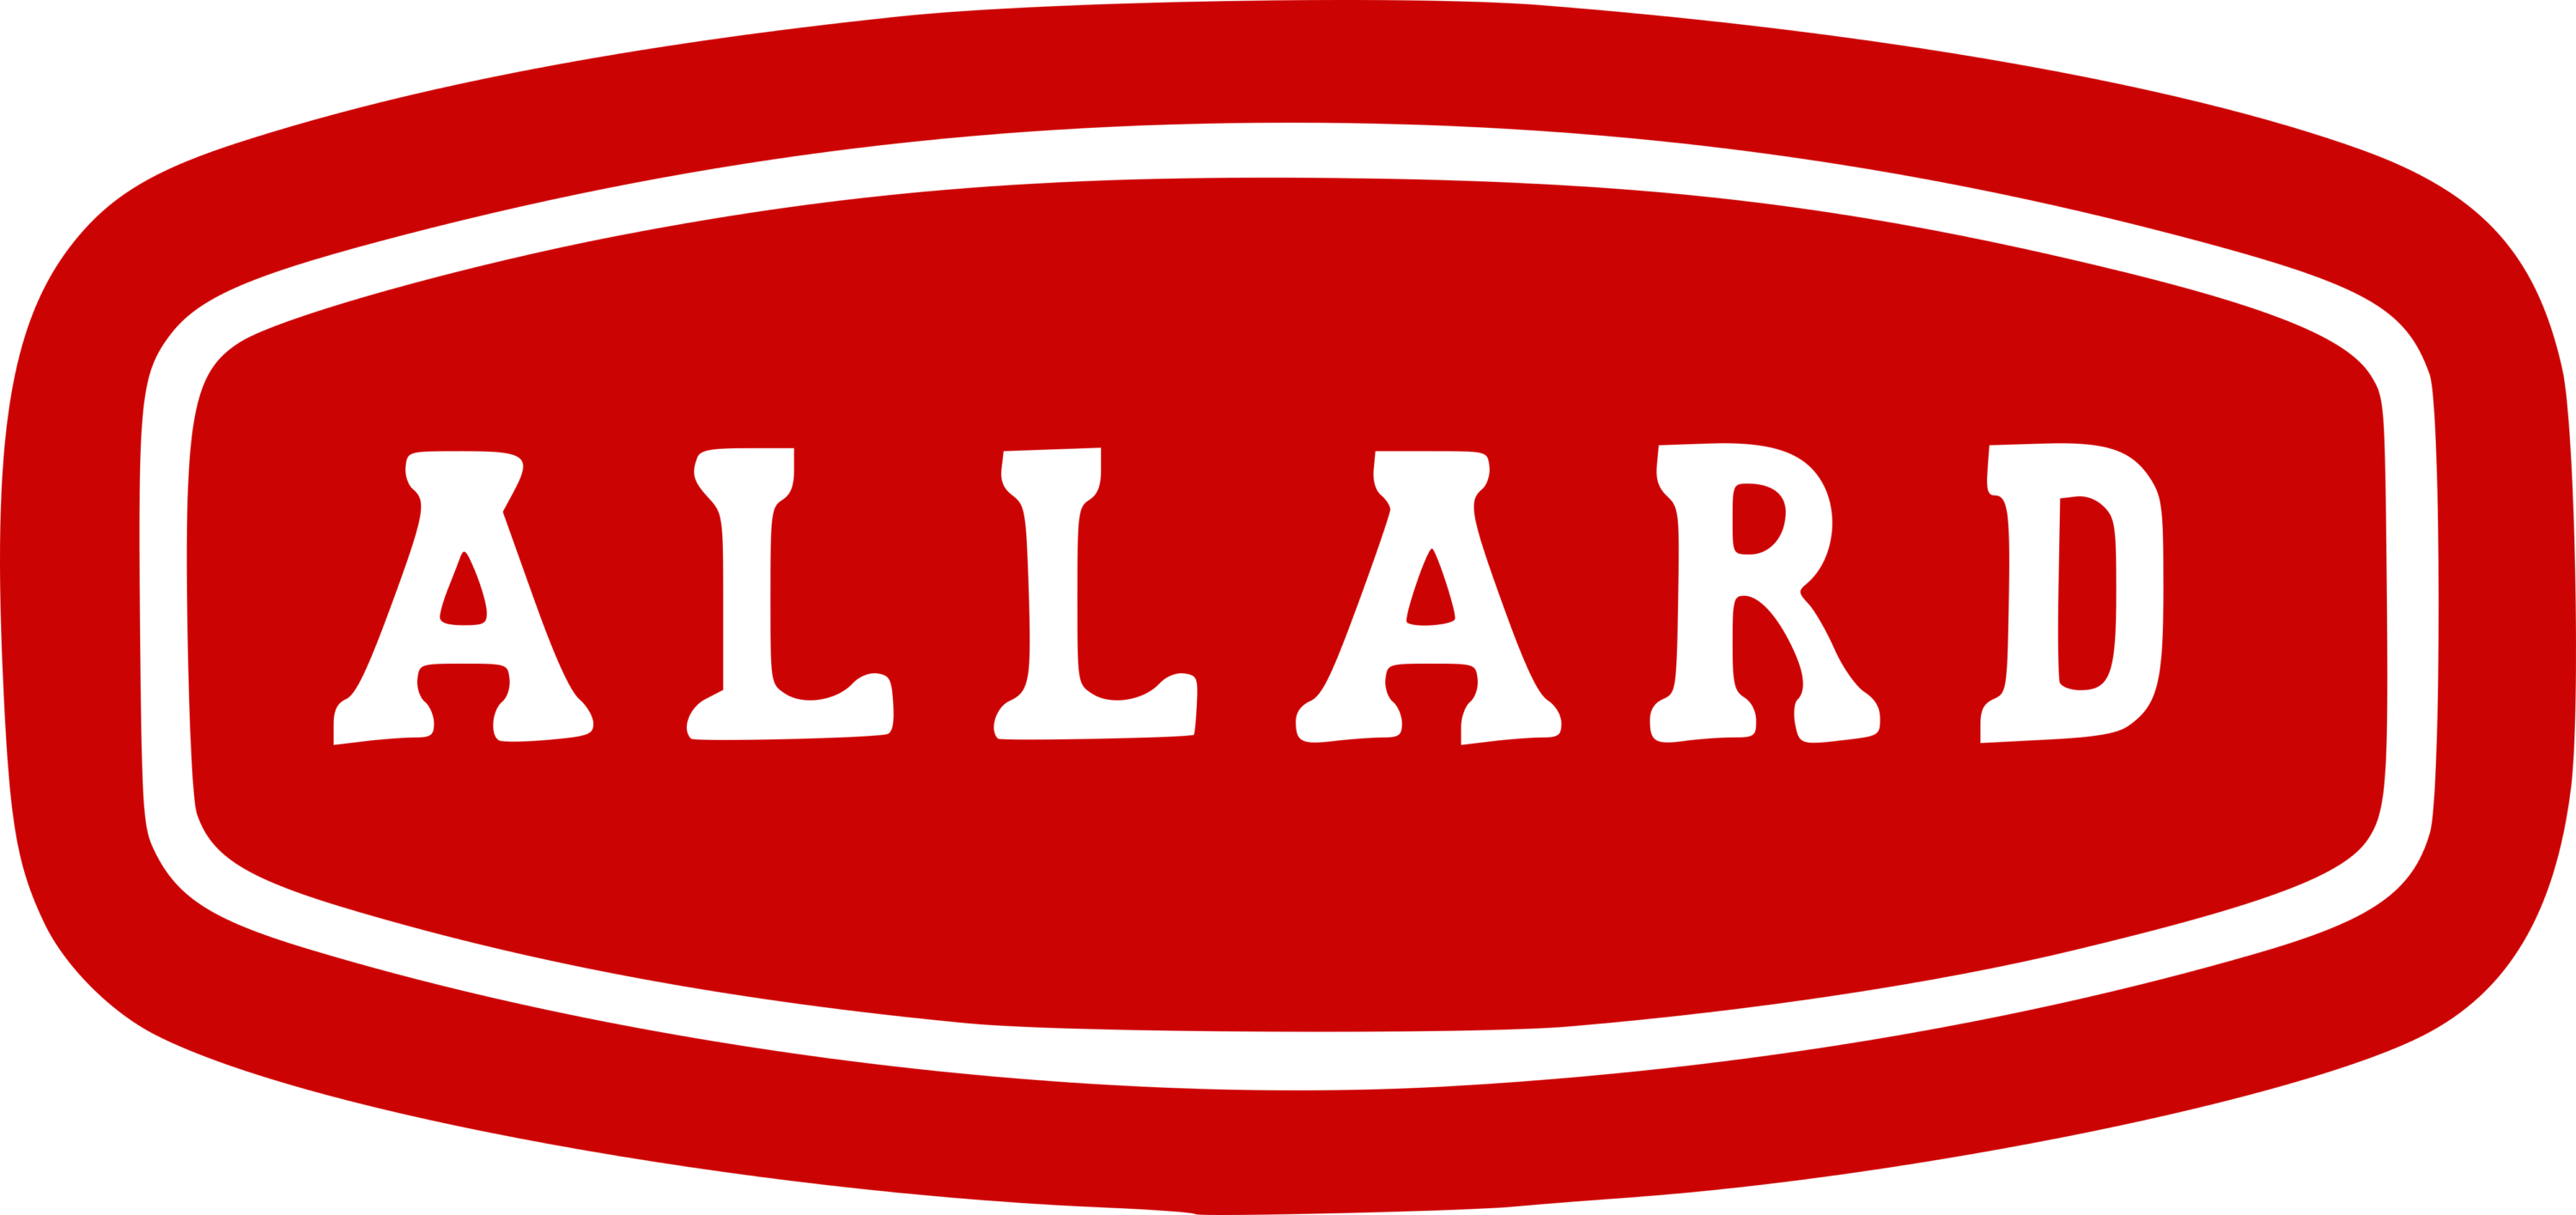 Allard Motor Company Logo